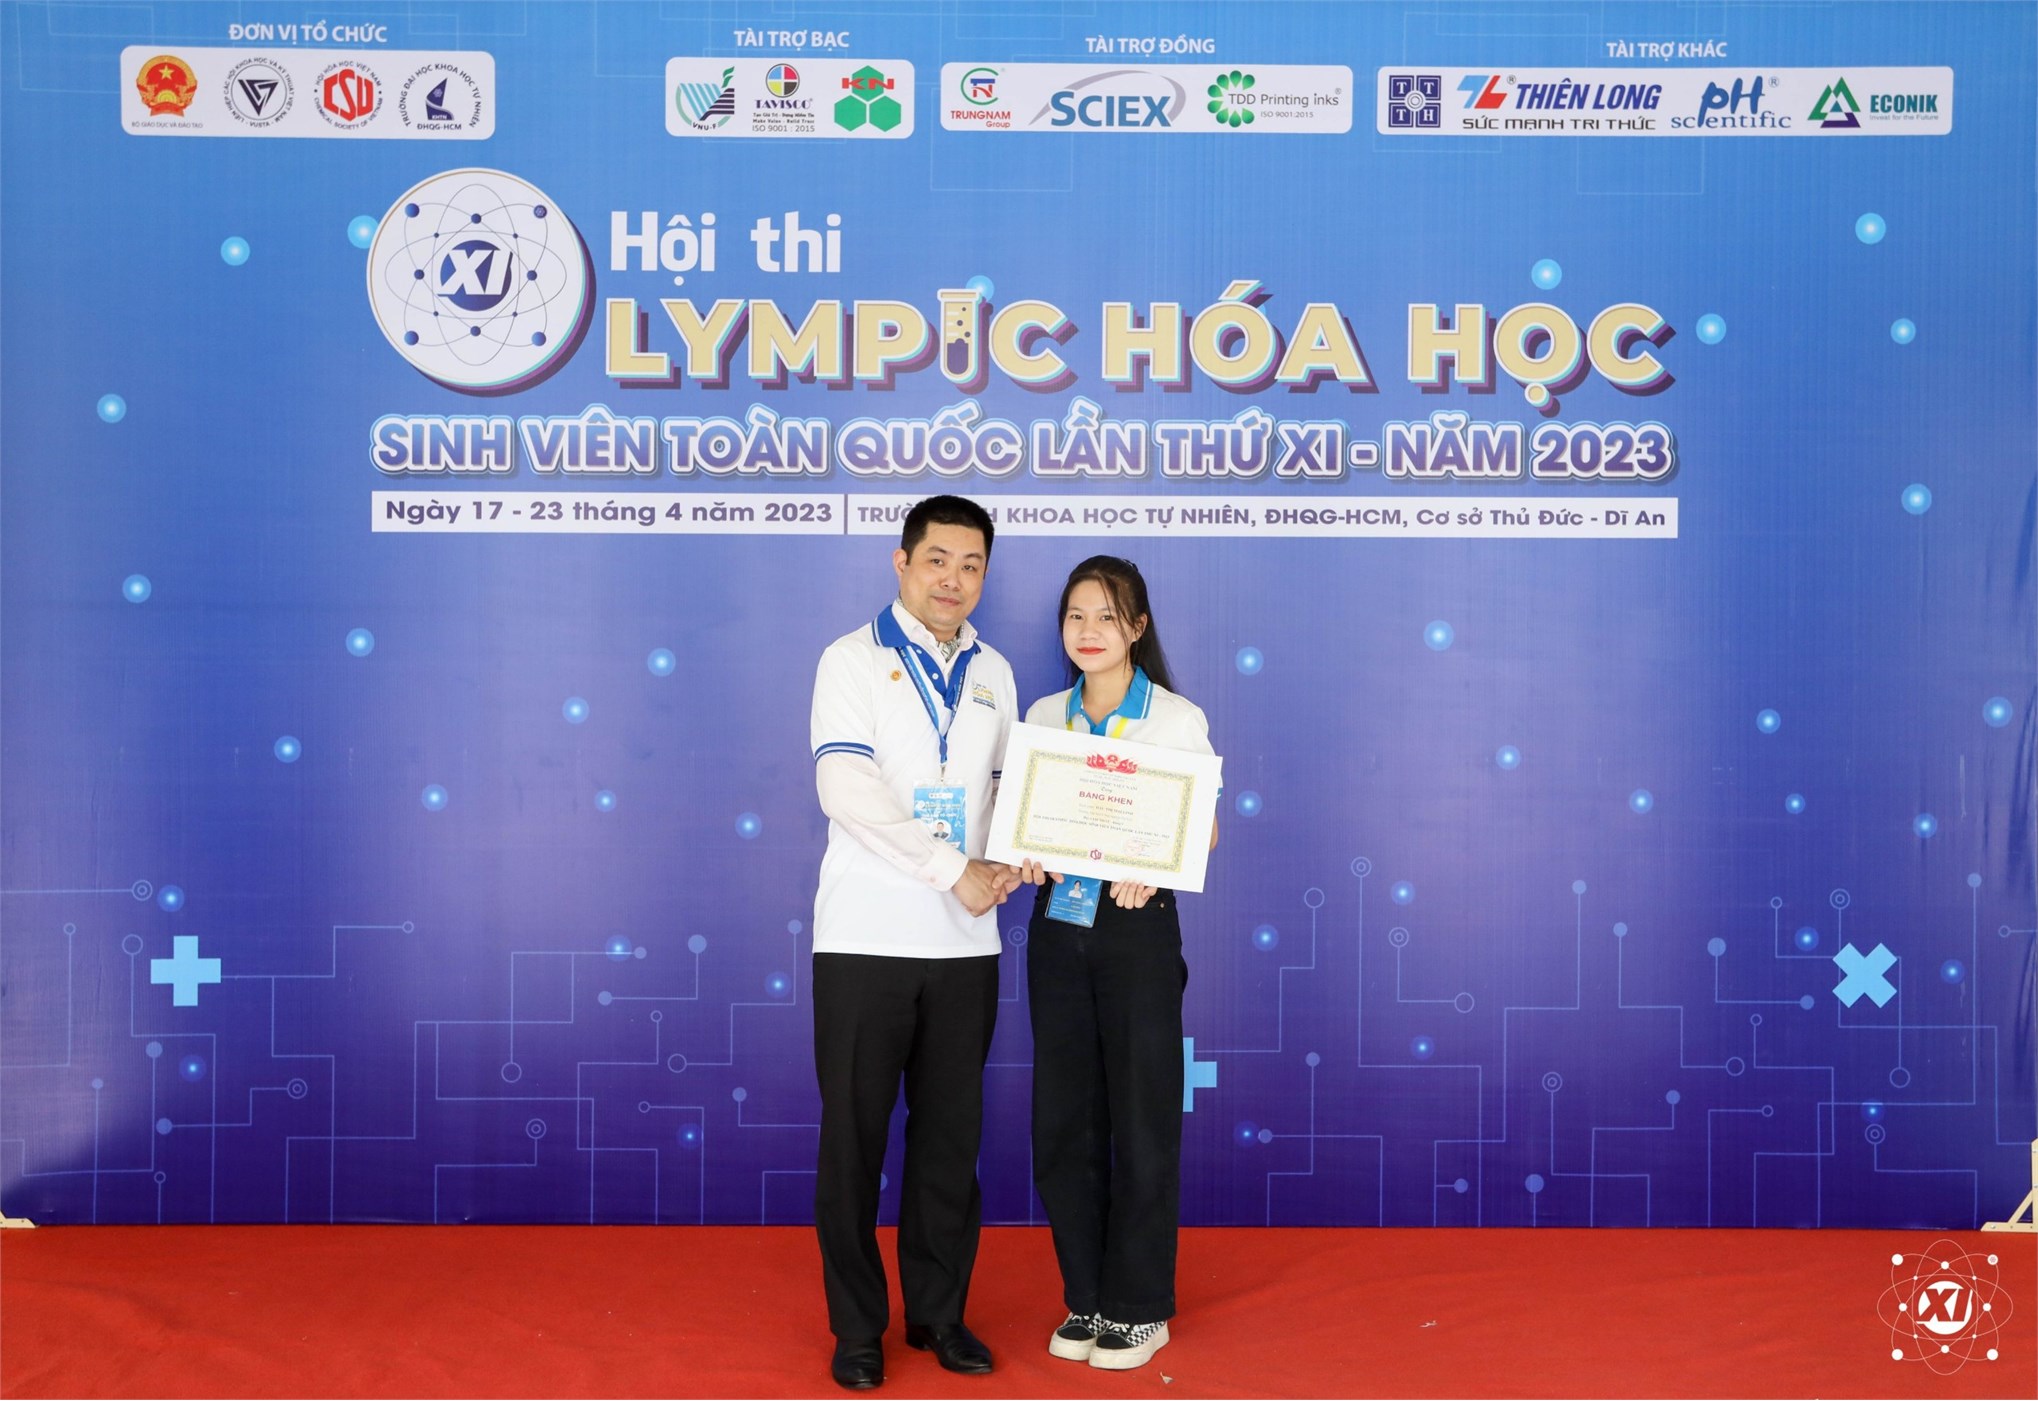 The Chemistry Olympiad team of Hanoi University of Industry